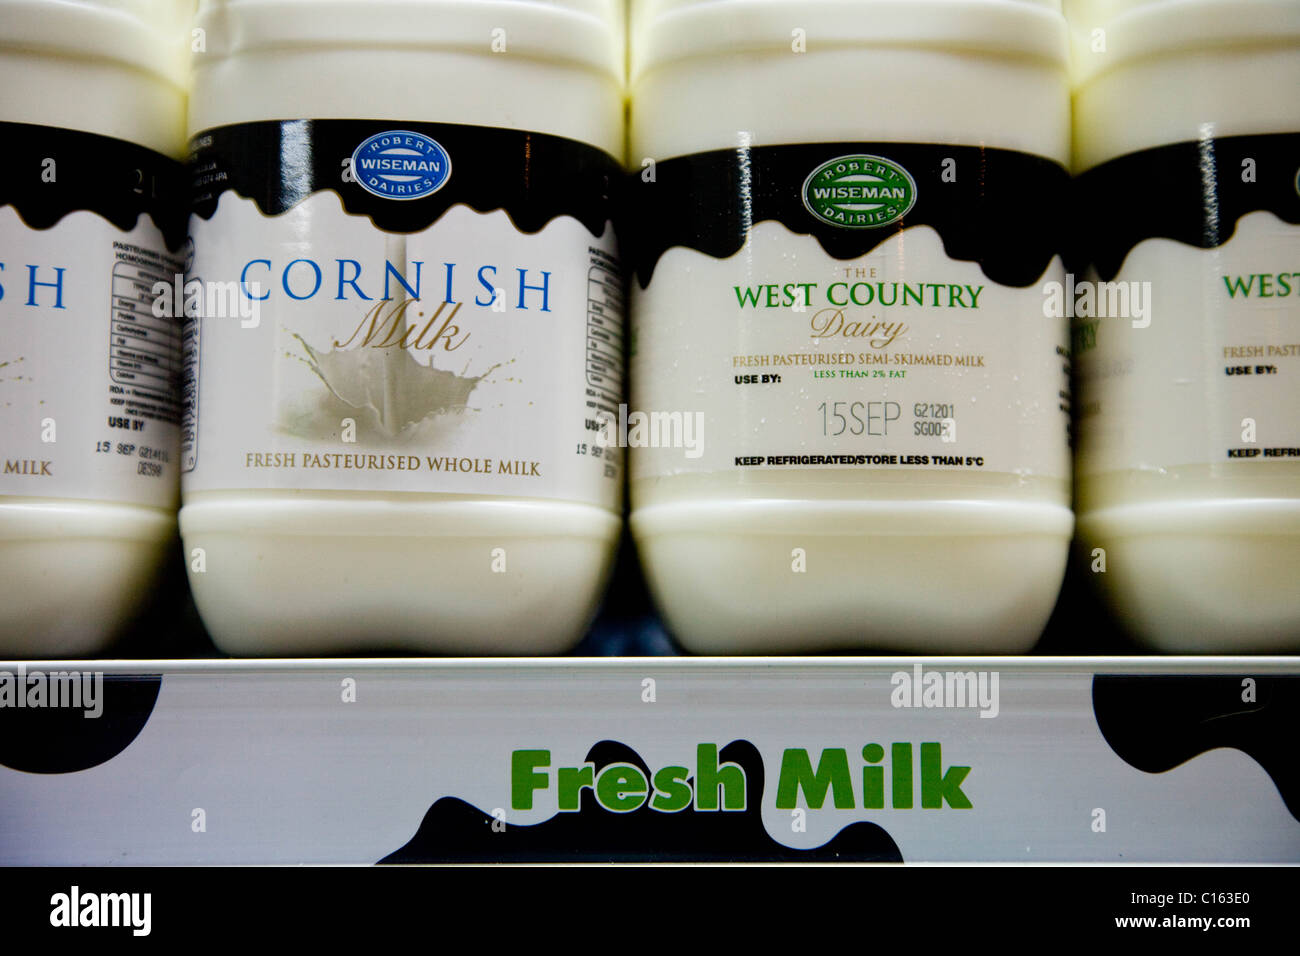 Robert Wiseman West Country Pasteurised Milk Stock Photo